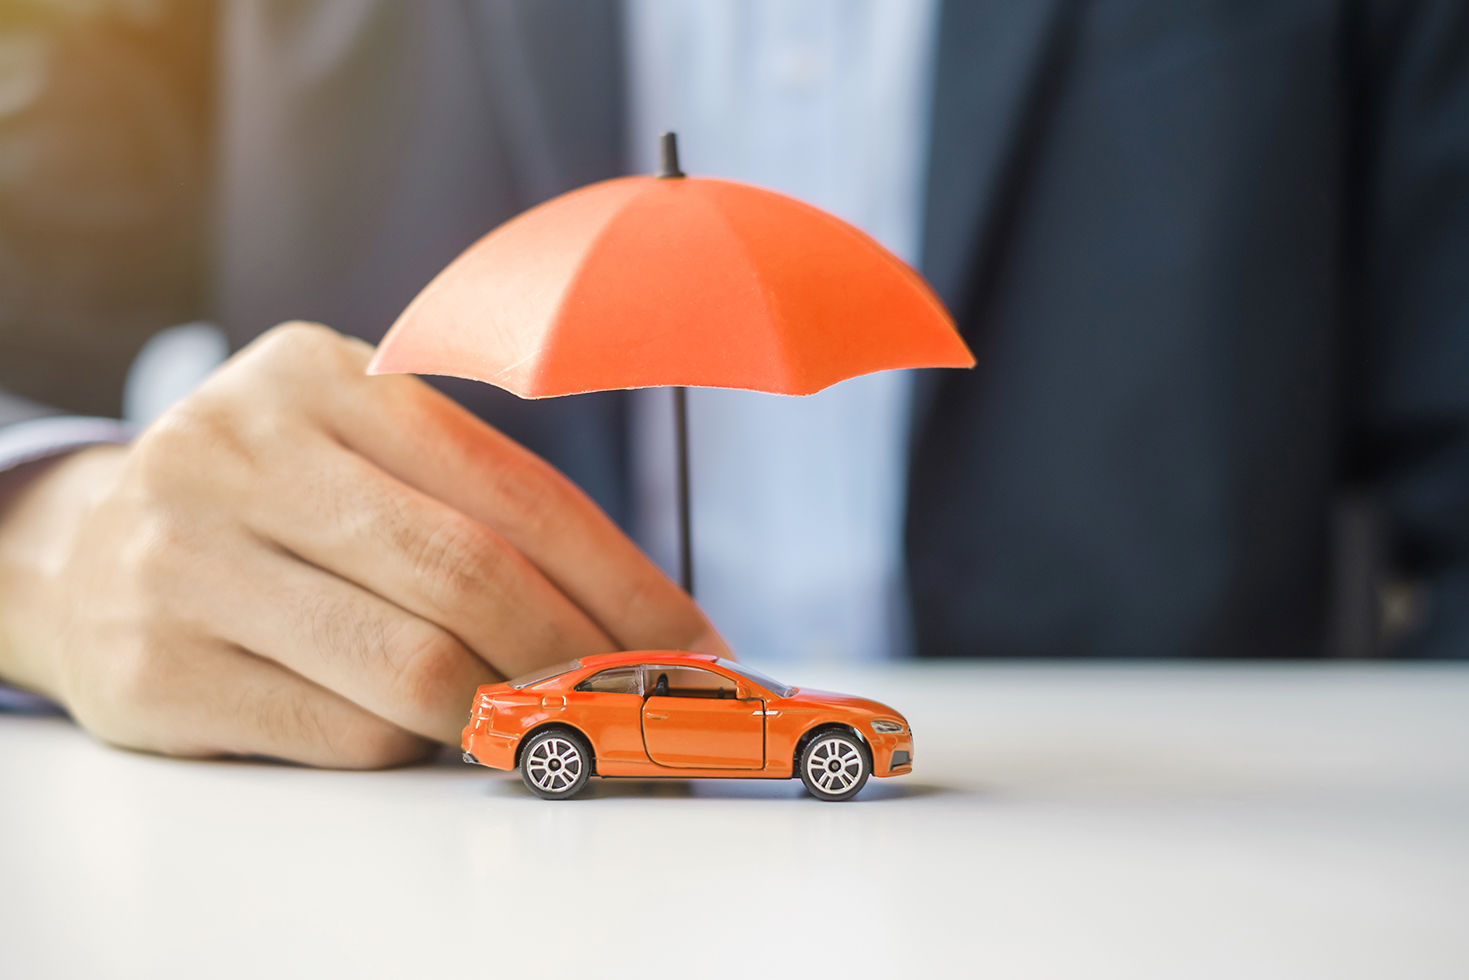 insurance broker holding umbrella above orange toy car 